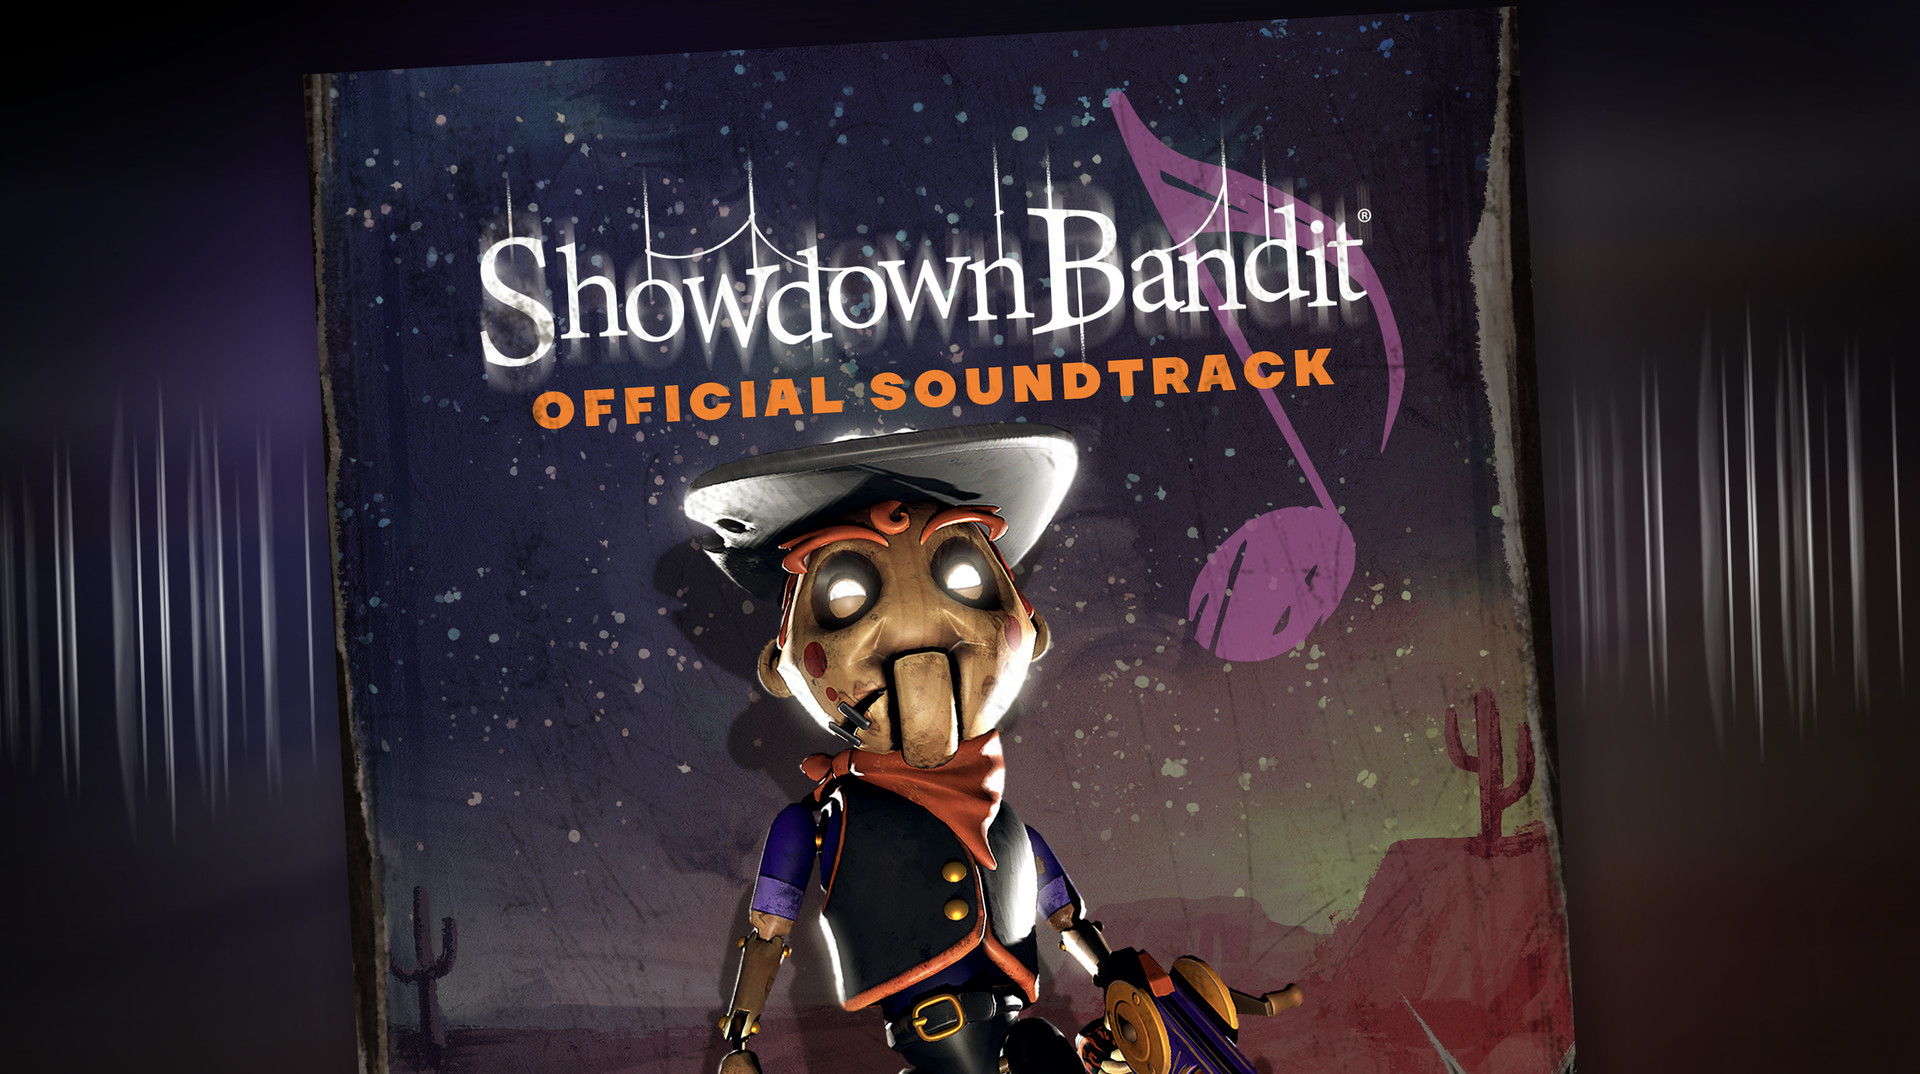 Stream SHOWDOWN BANDIT SONG (Looking for a Showdown)- DAGames